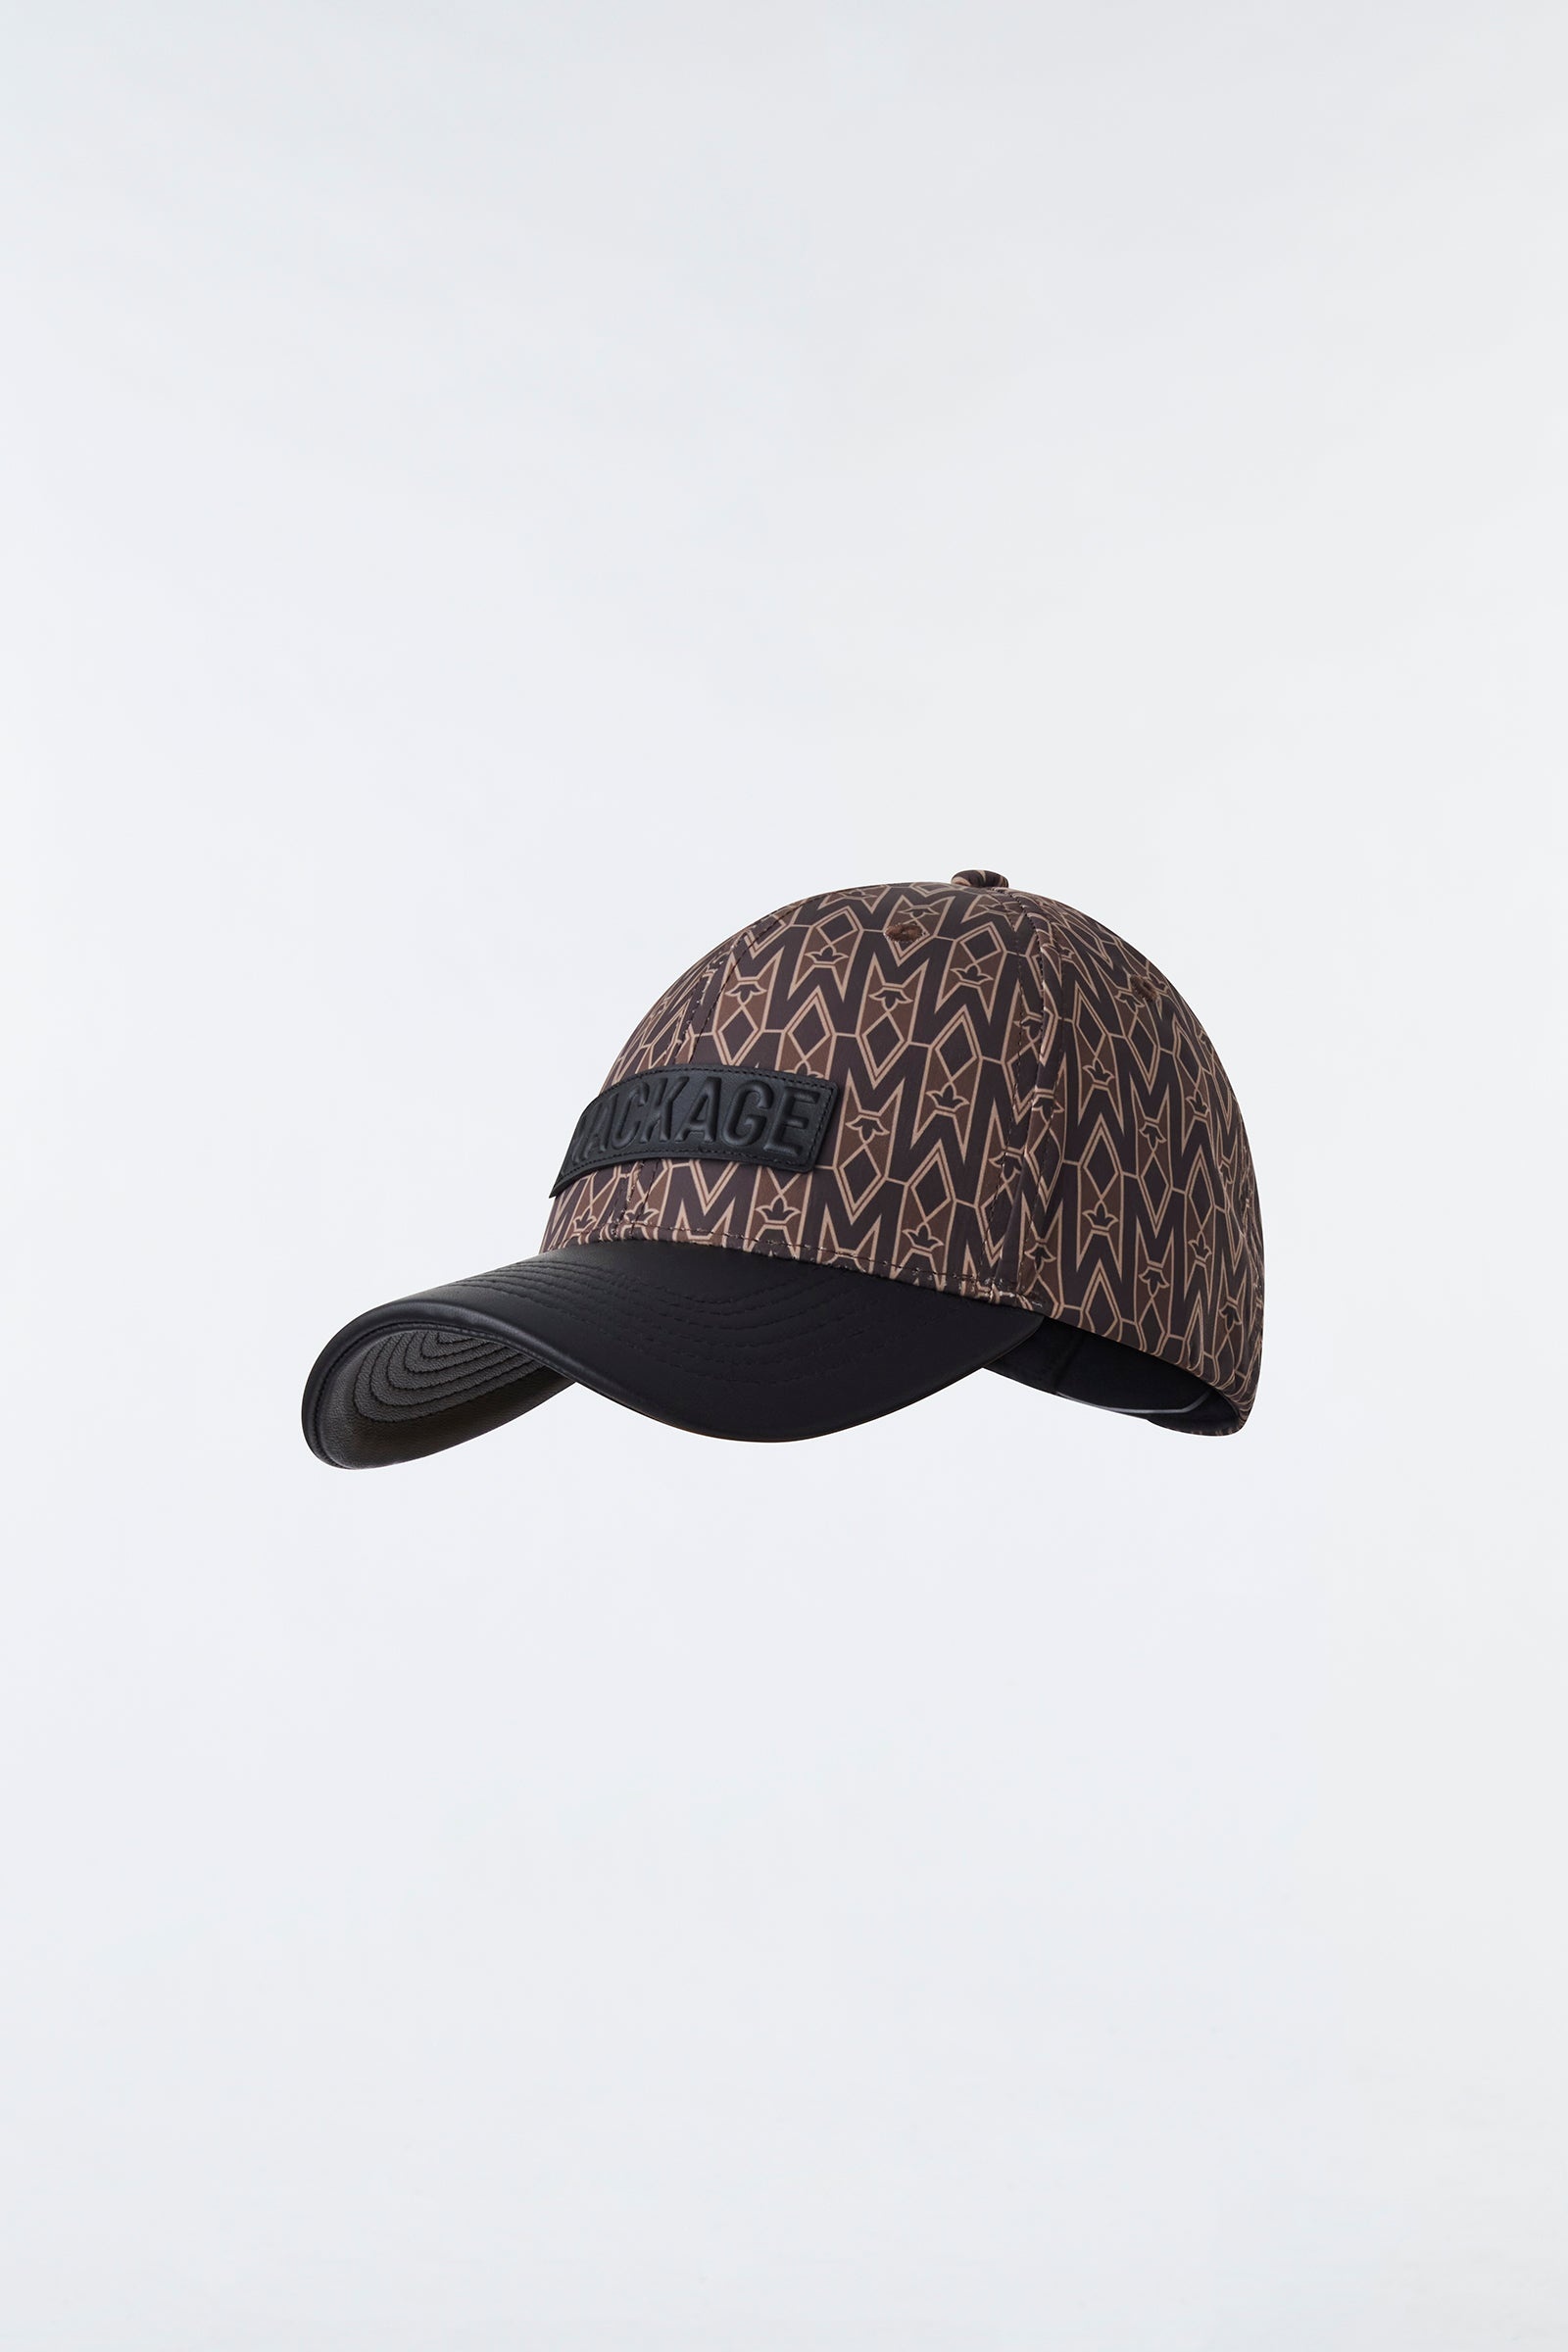 ANDERSON Baseball cap (R) Leather wordmark - 1